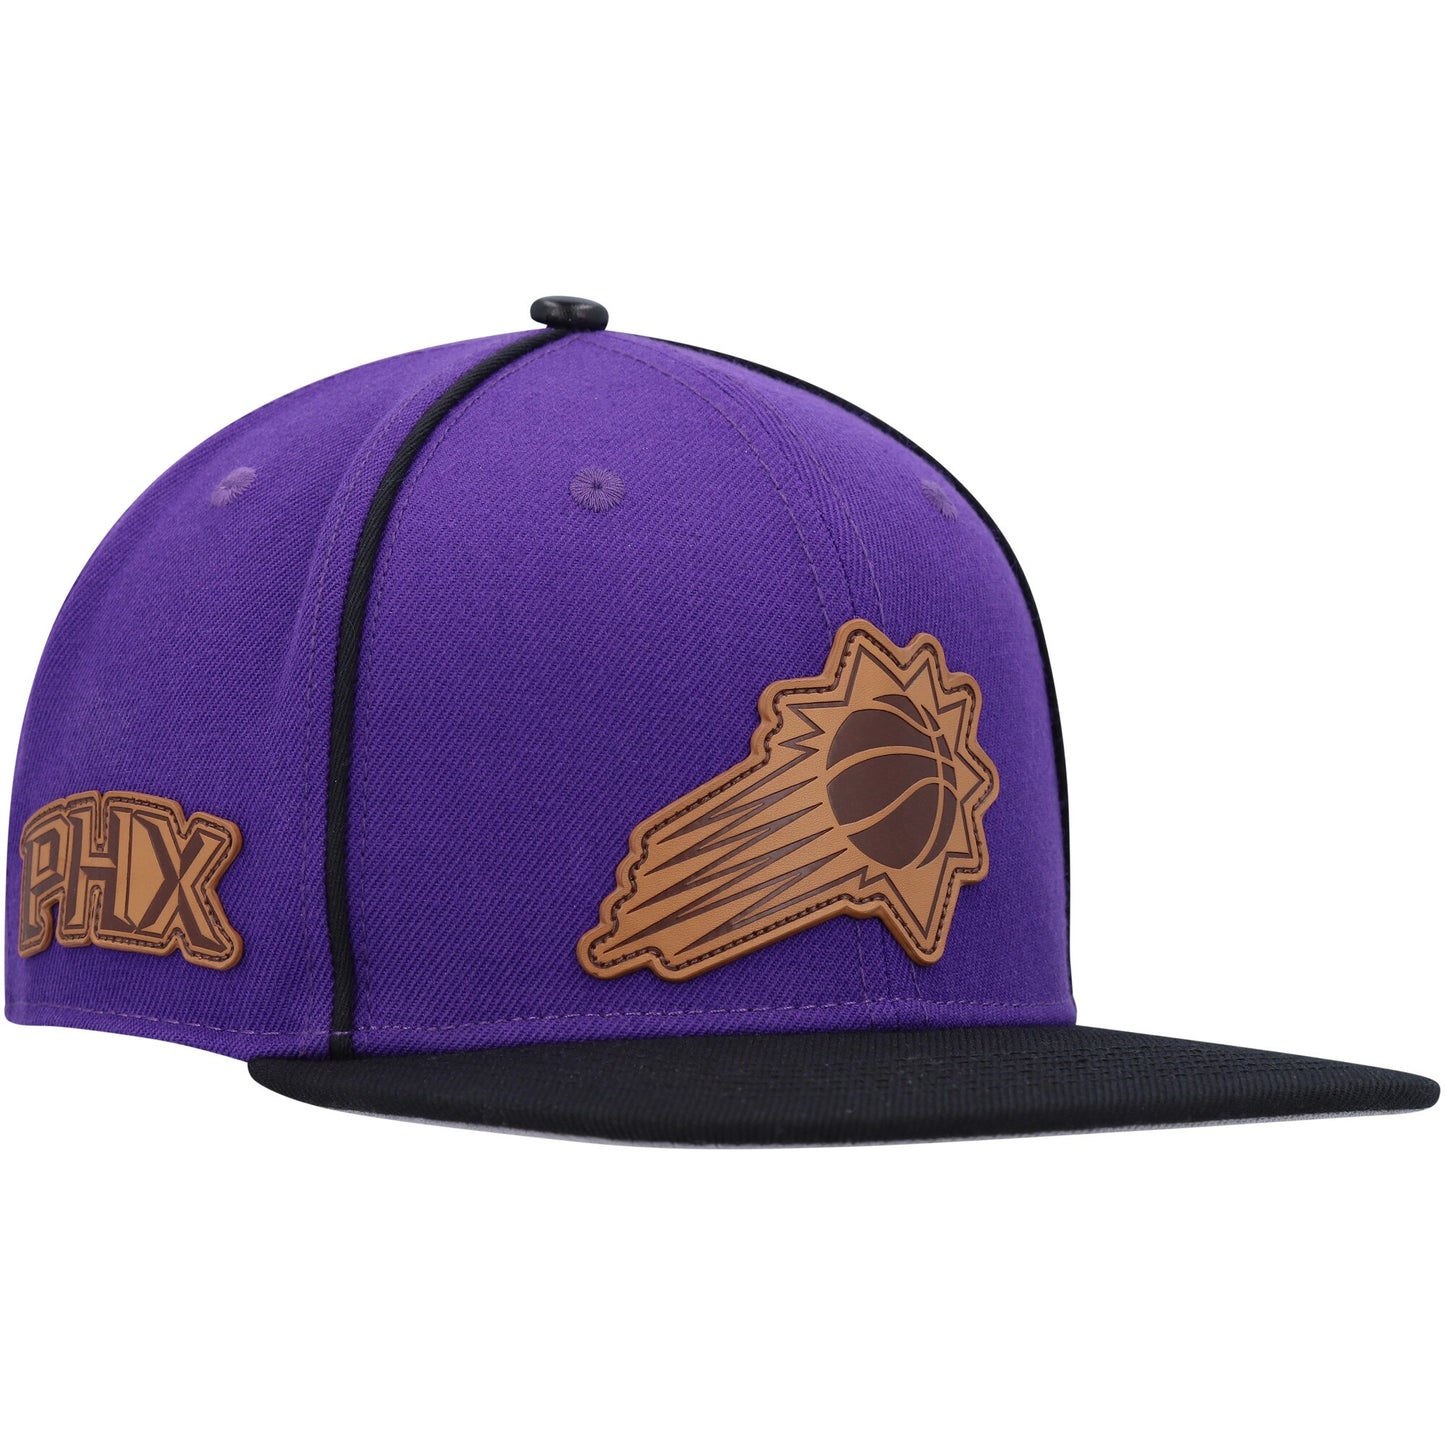 Phoenix Suns Pro Standard Heritage Leather Patch Snapback Hat - Purple/Black